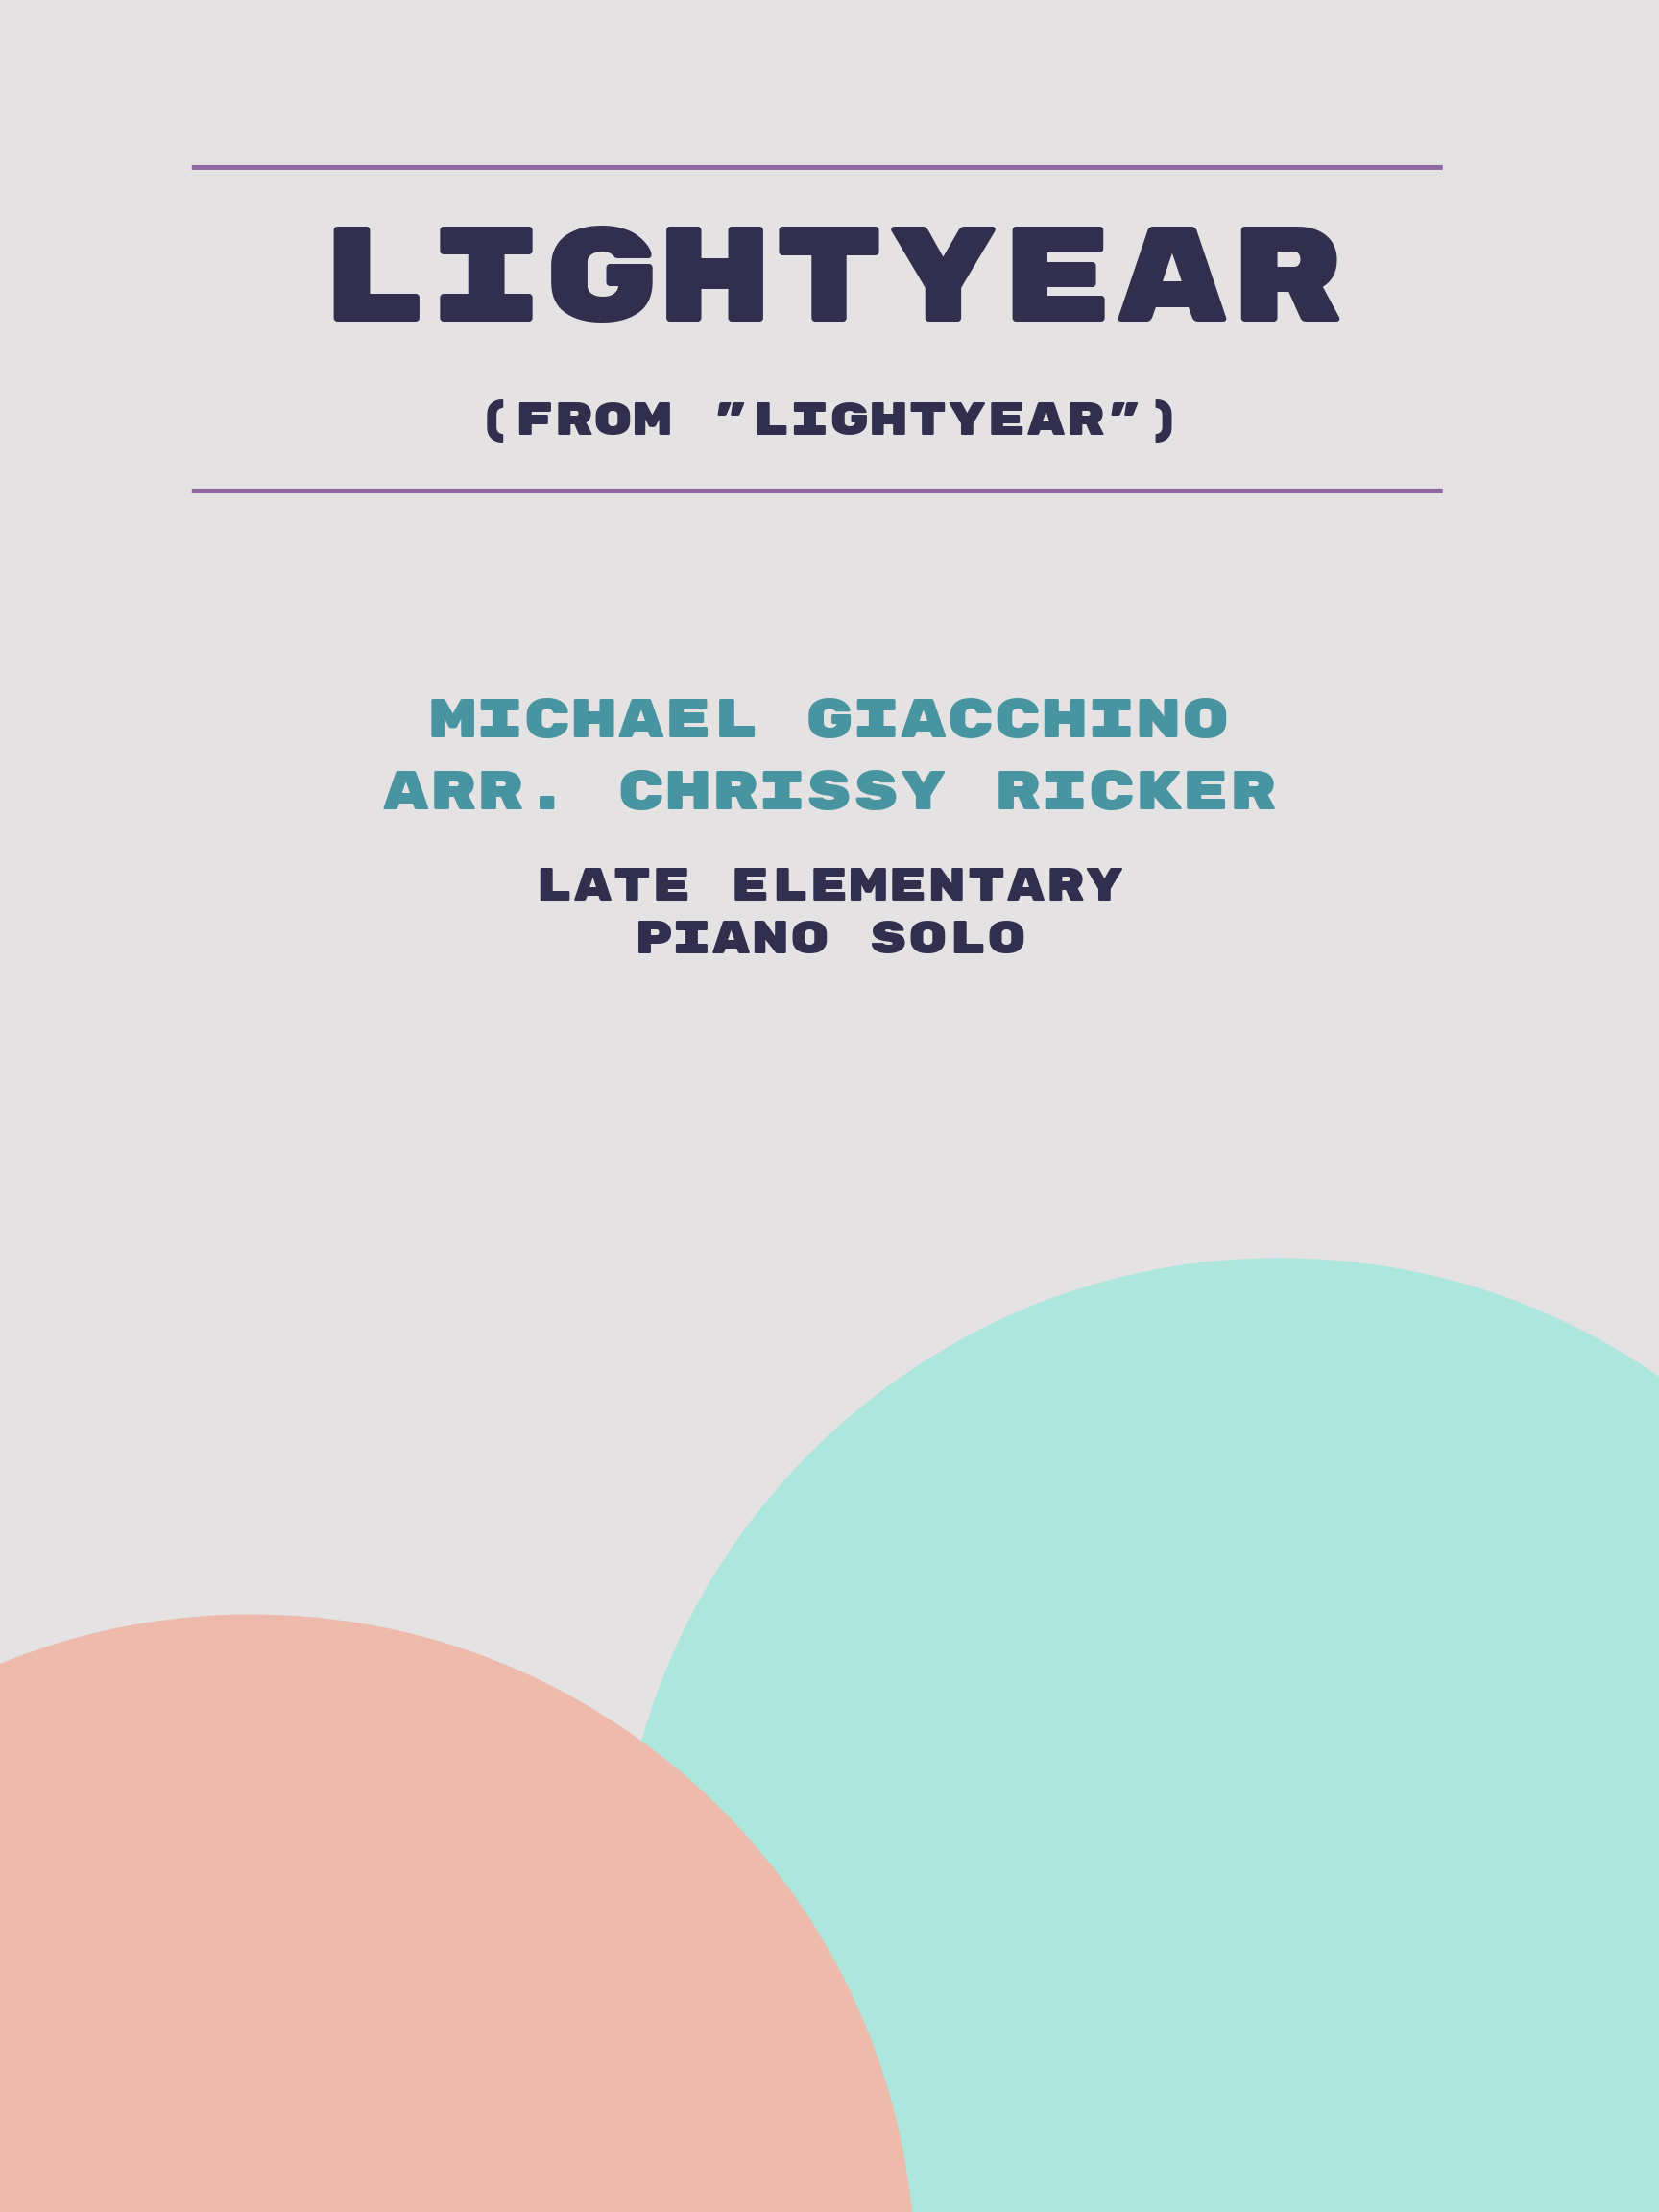 Lightyear by Michael Giacchino